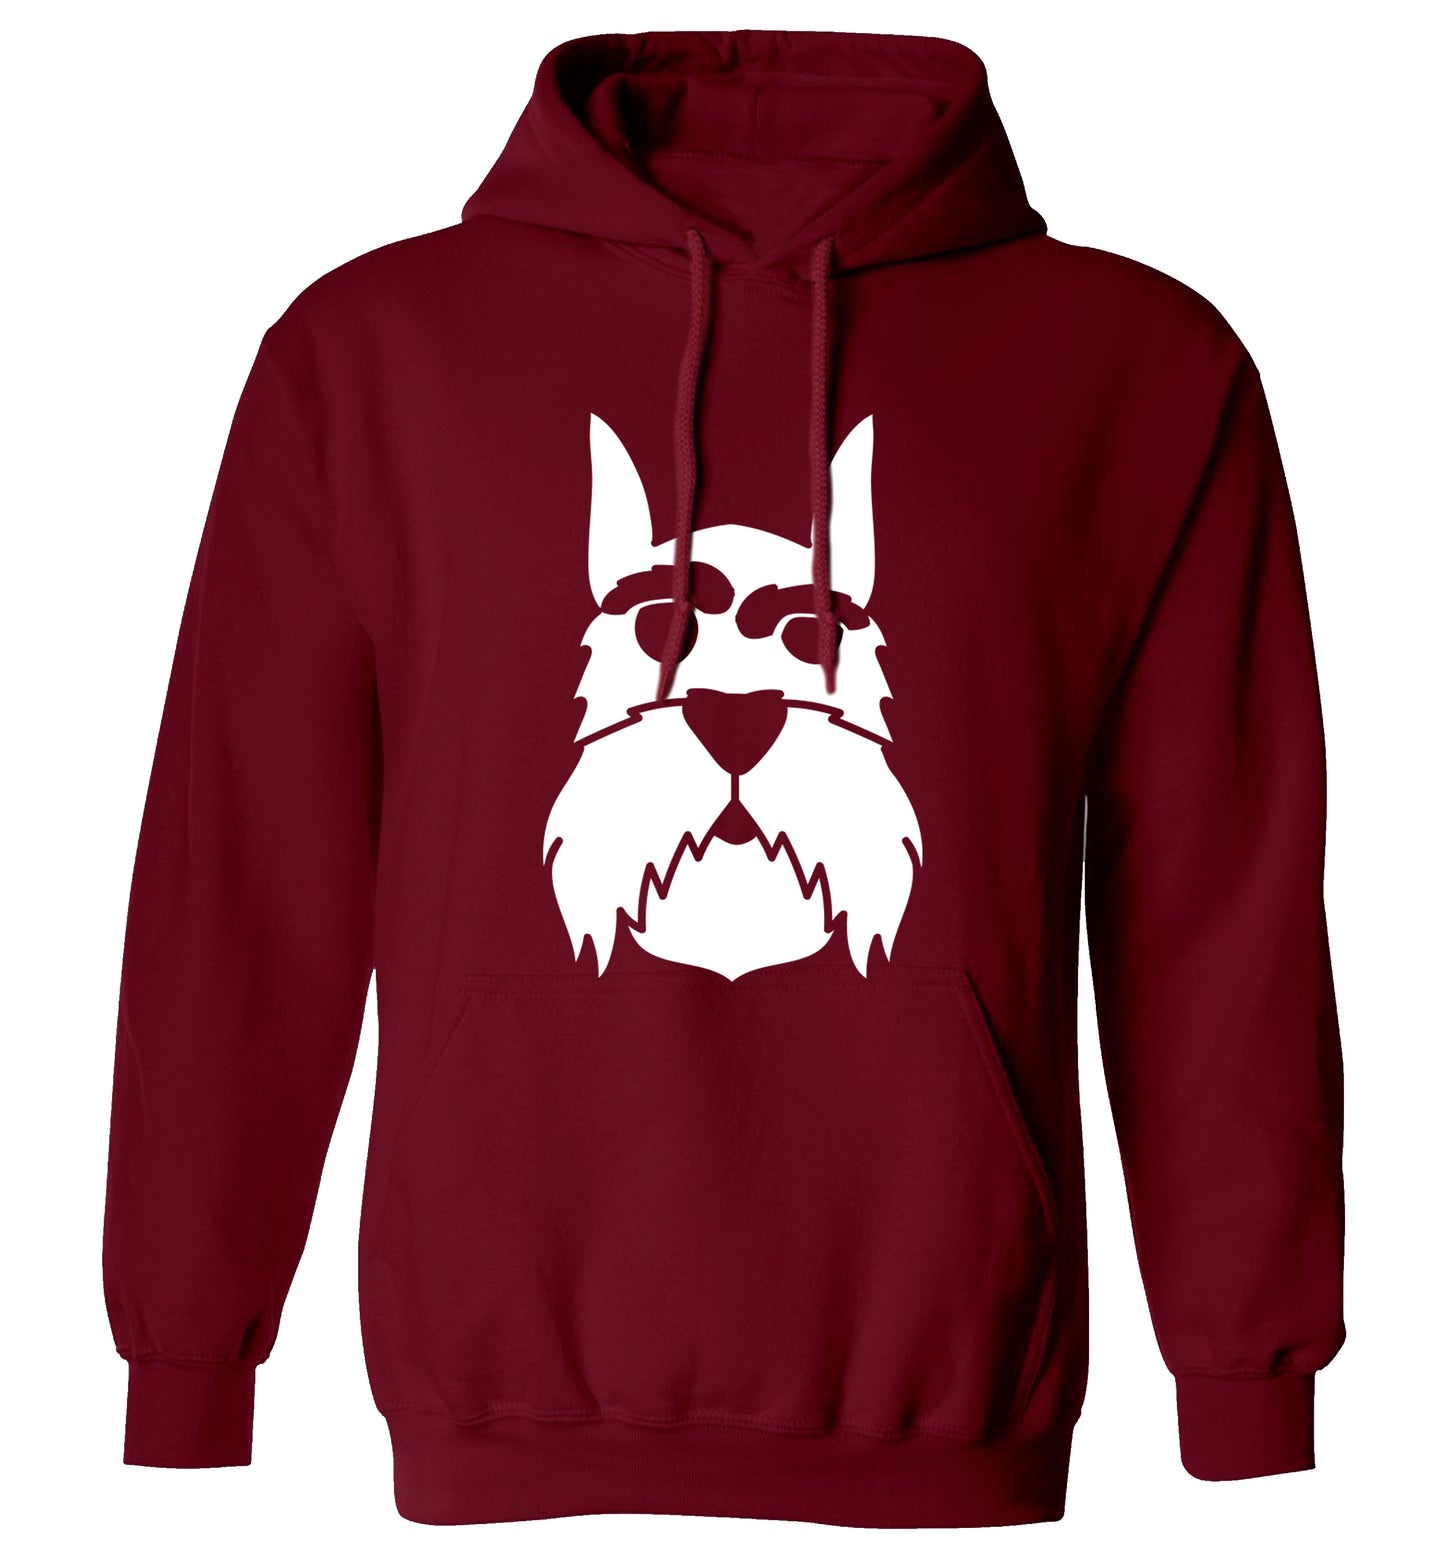 Schnauzer dog illustration adults unisex maroon hoodie 2XL